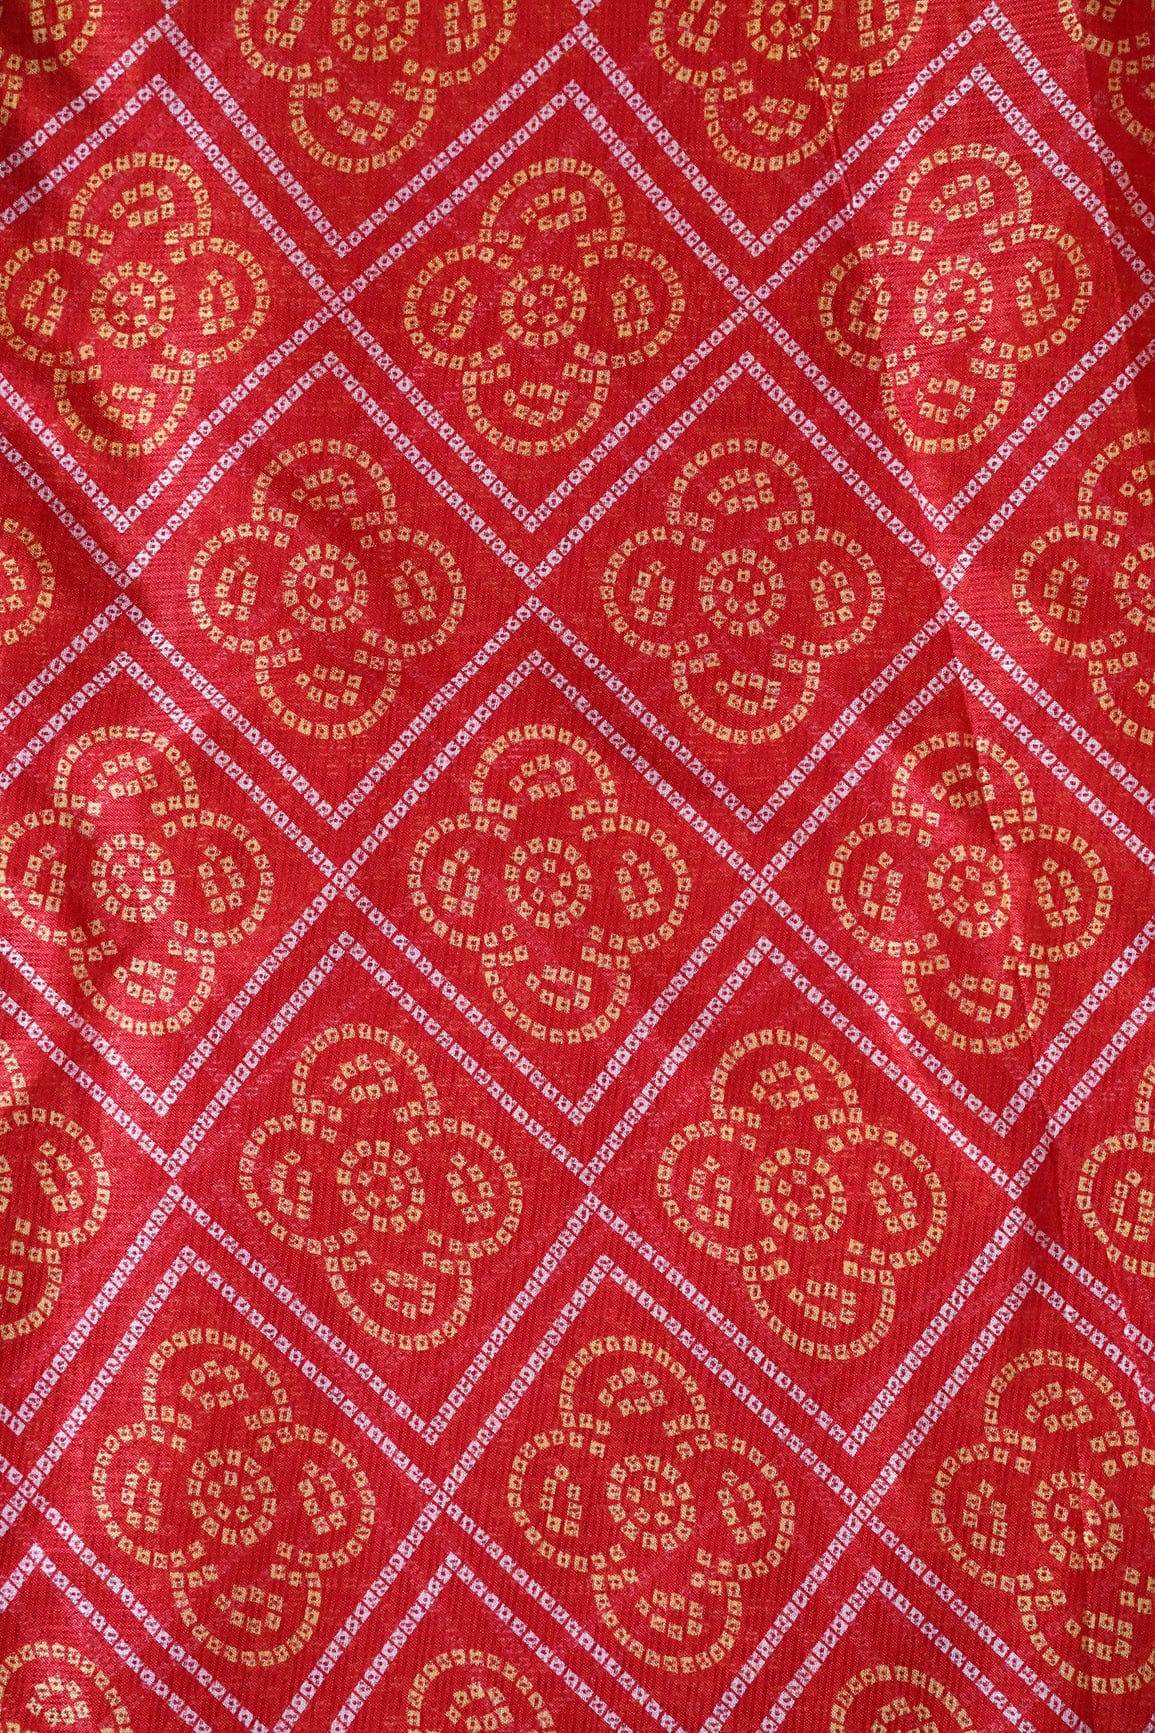 doeraa Prints White And Yellow Bandhani Print On Red Kota Doria Fabric